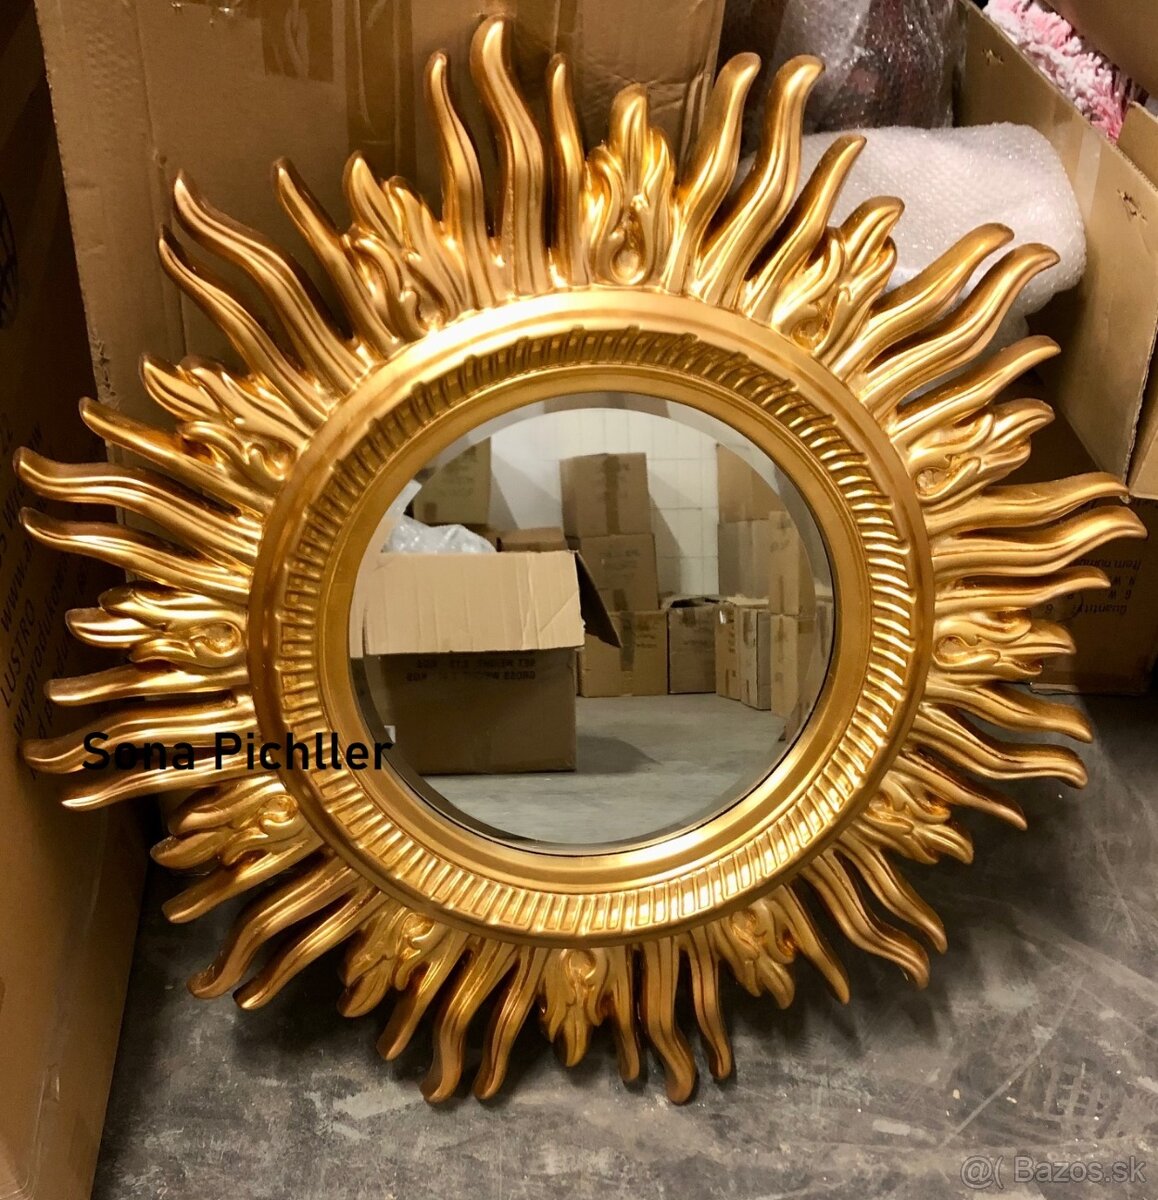 Dizajnove zrkadlo zlate - SLNKO  90cm - 35%